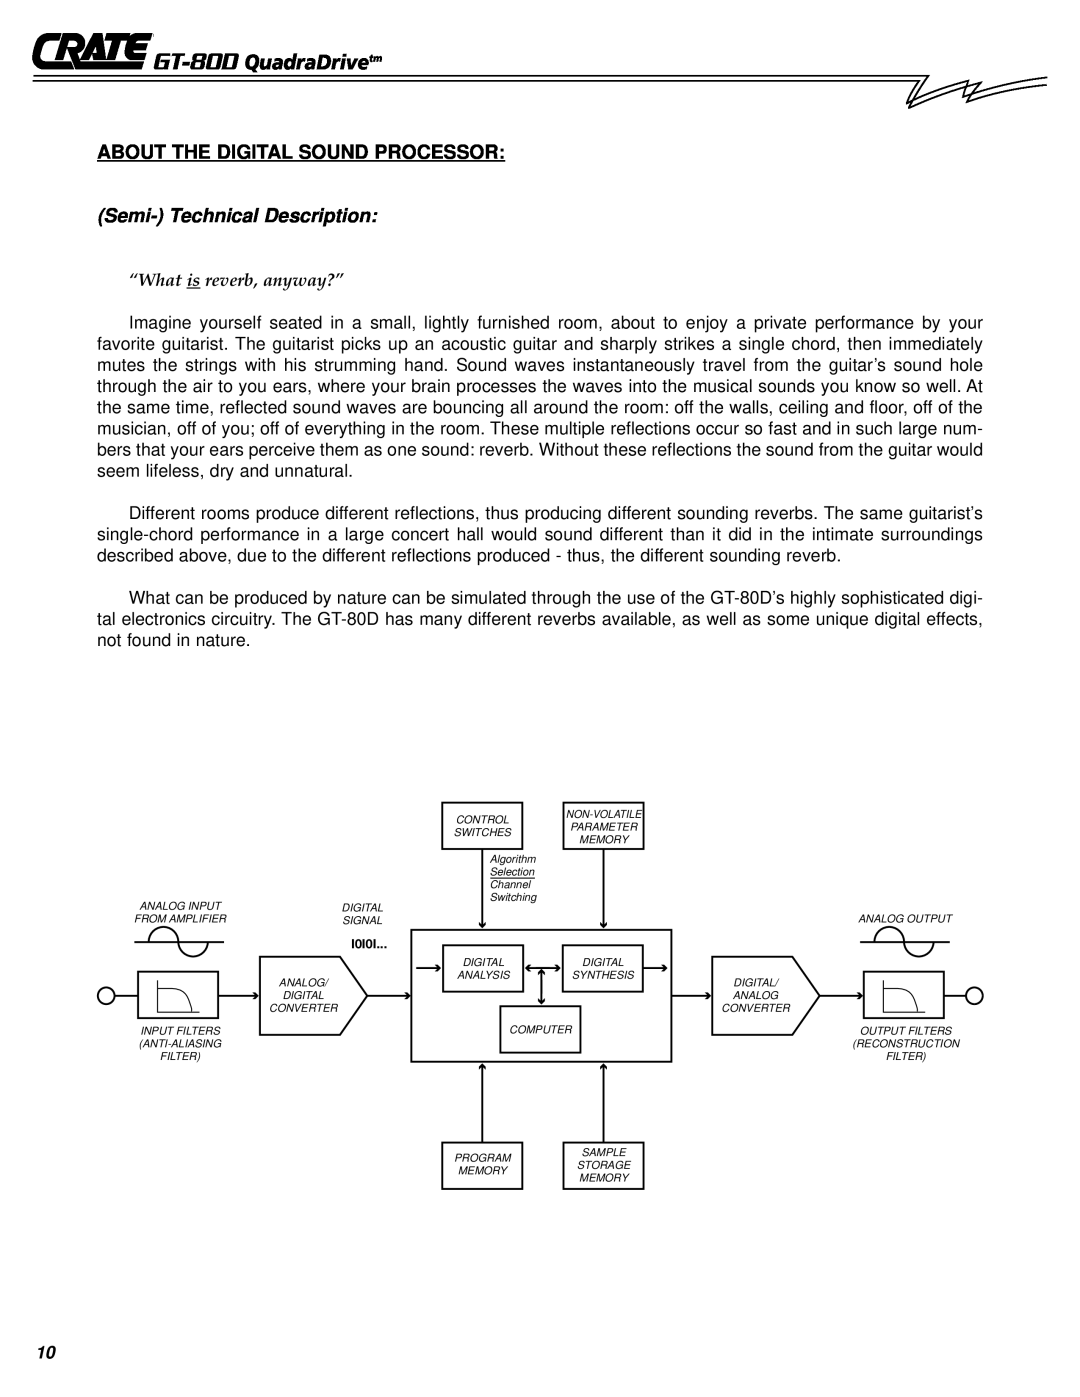 Crate Amplifiers owner manual Semi-Technical Description, GT-80D QuadraDrivetm, About The Digital Sound Processor 